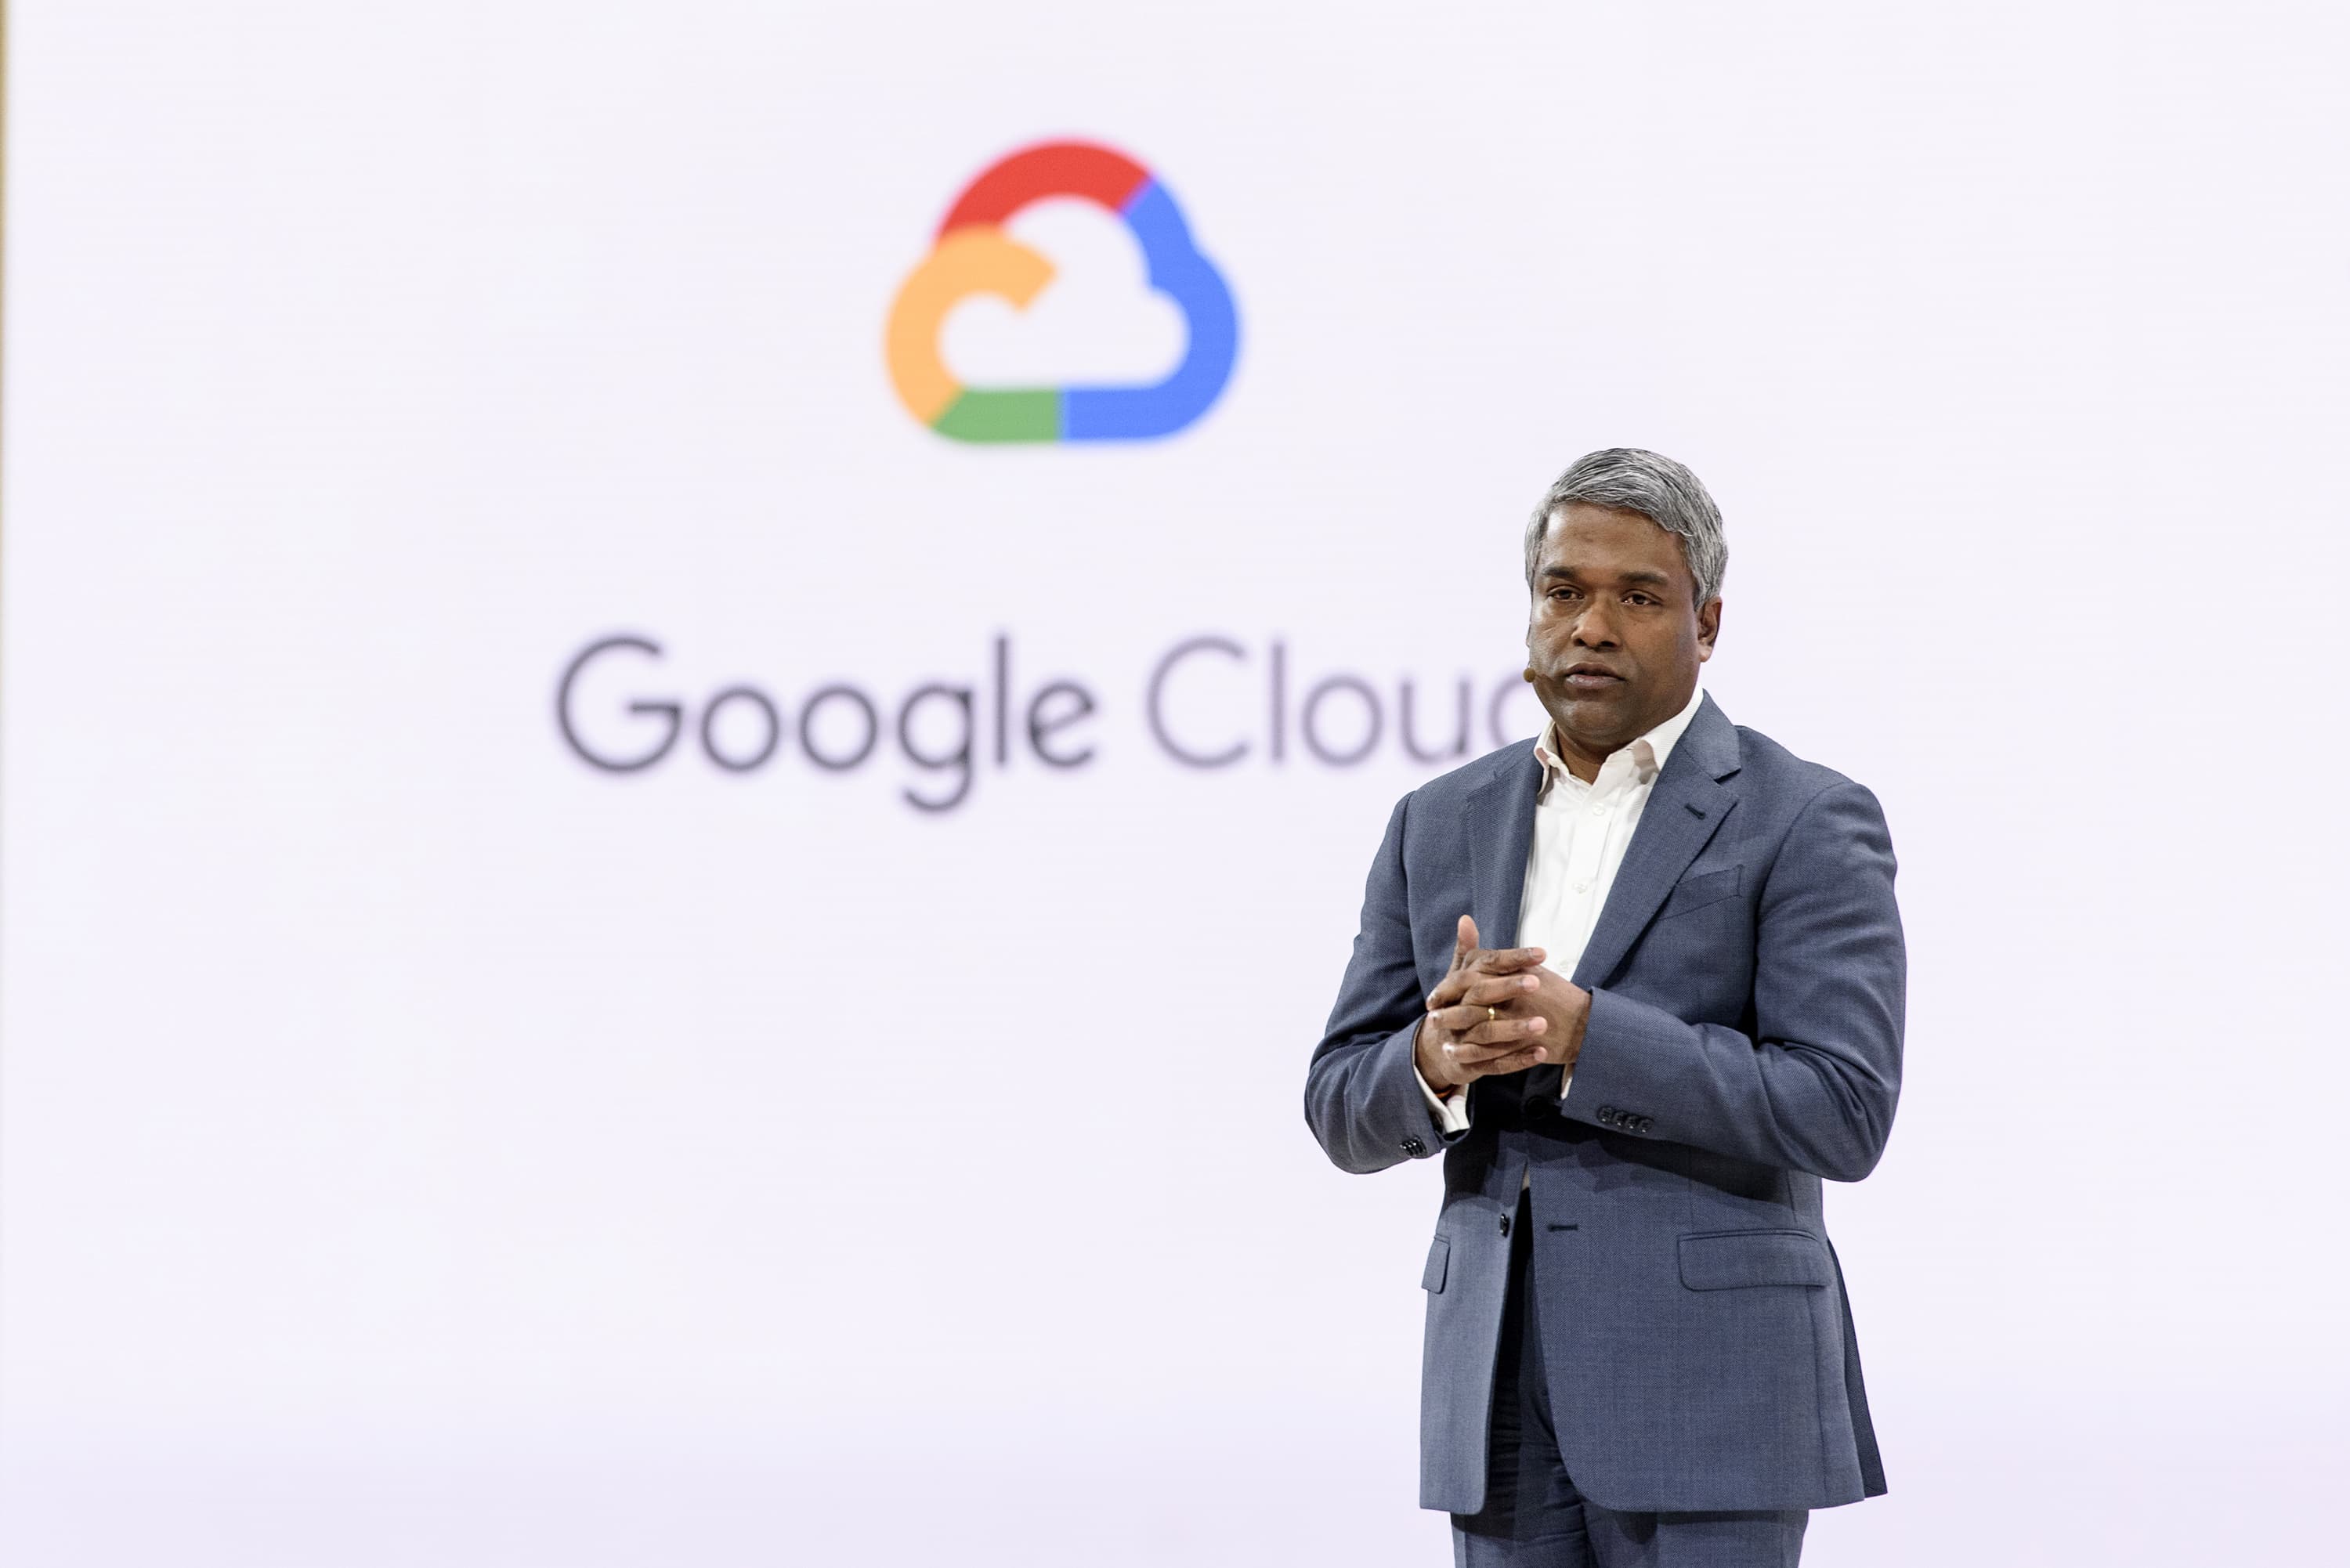 Google Cloudtop virtual desktop tool for employees only